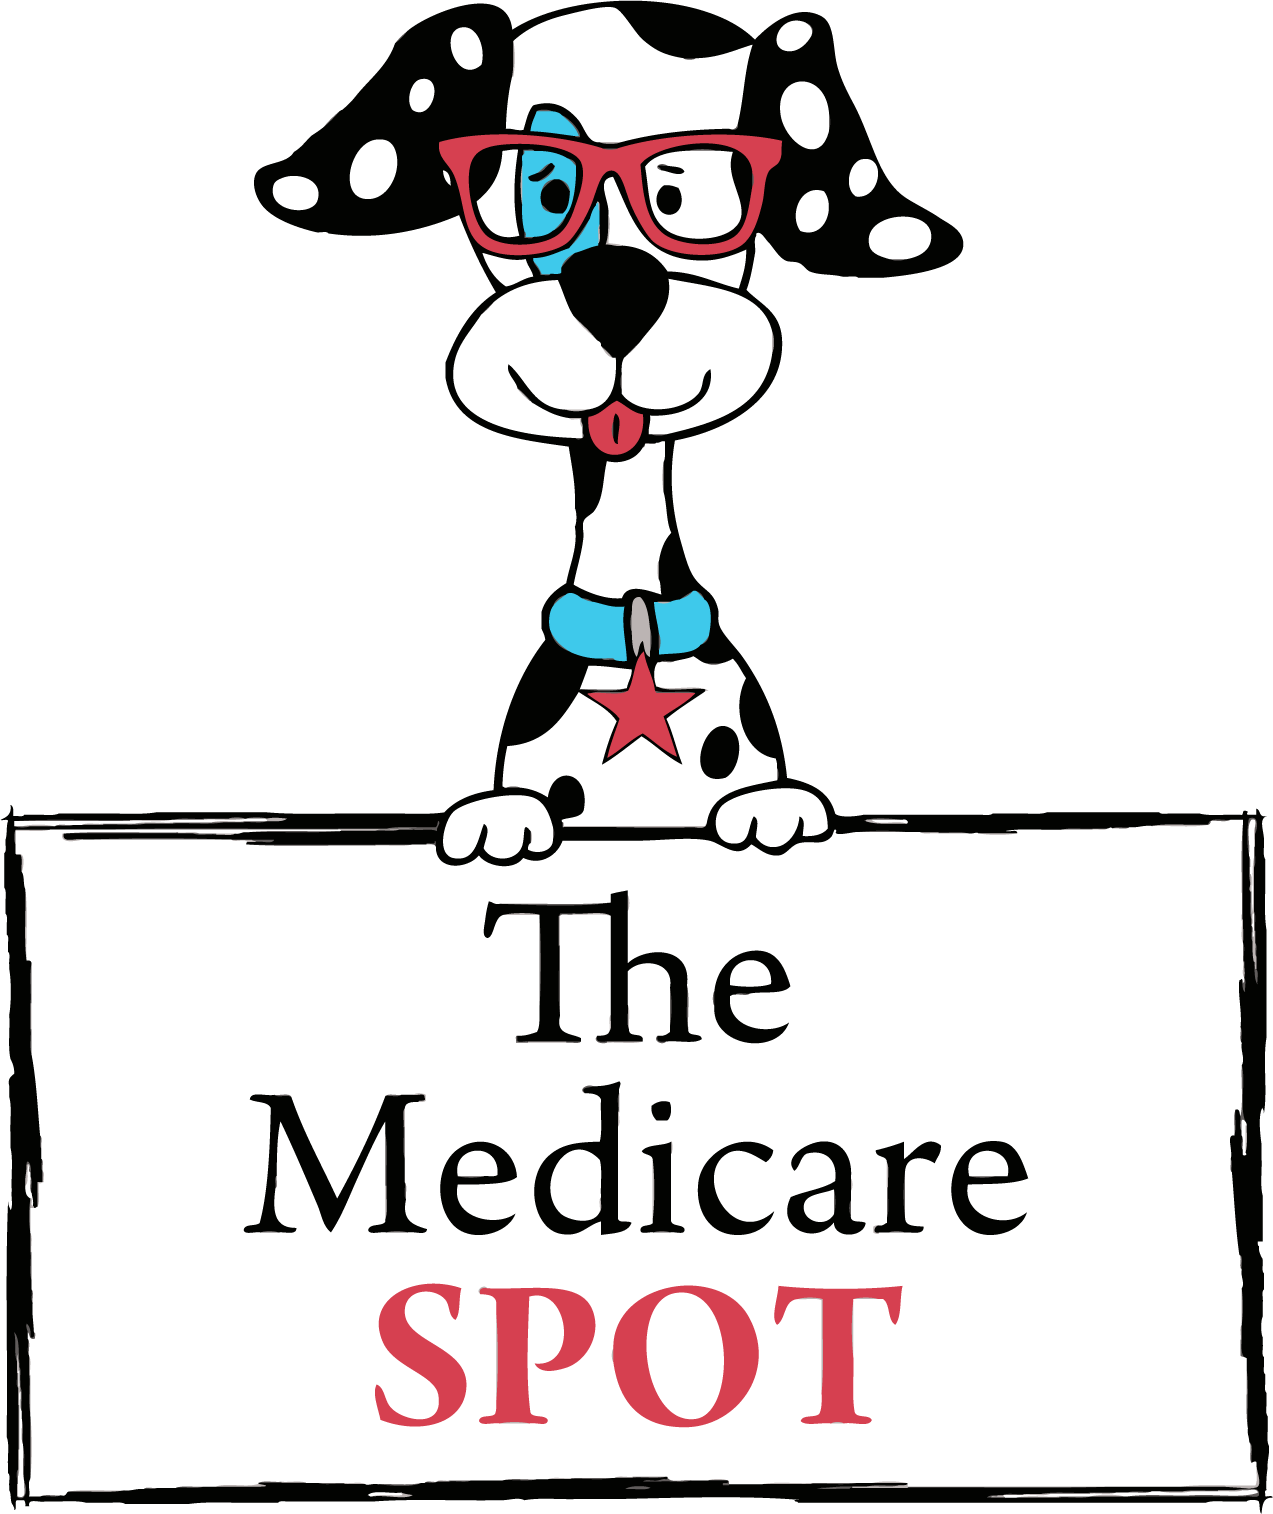 The Medicare Spot